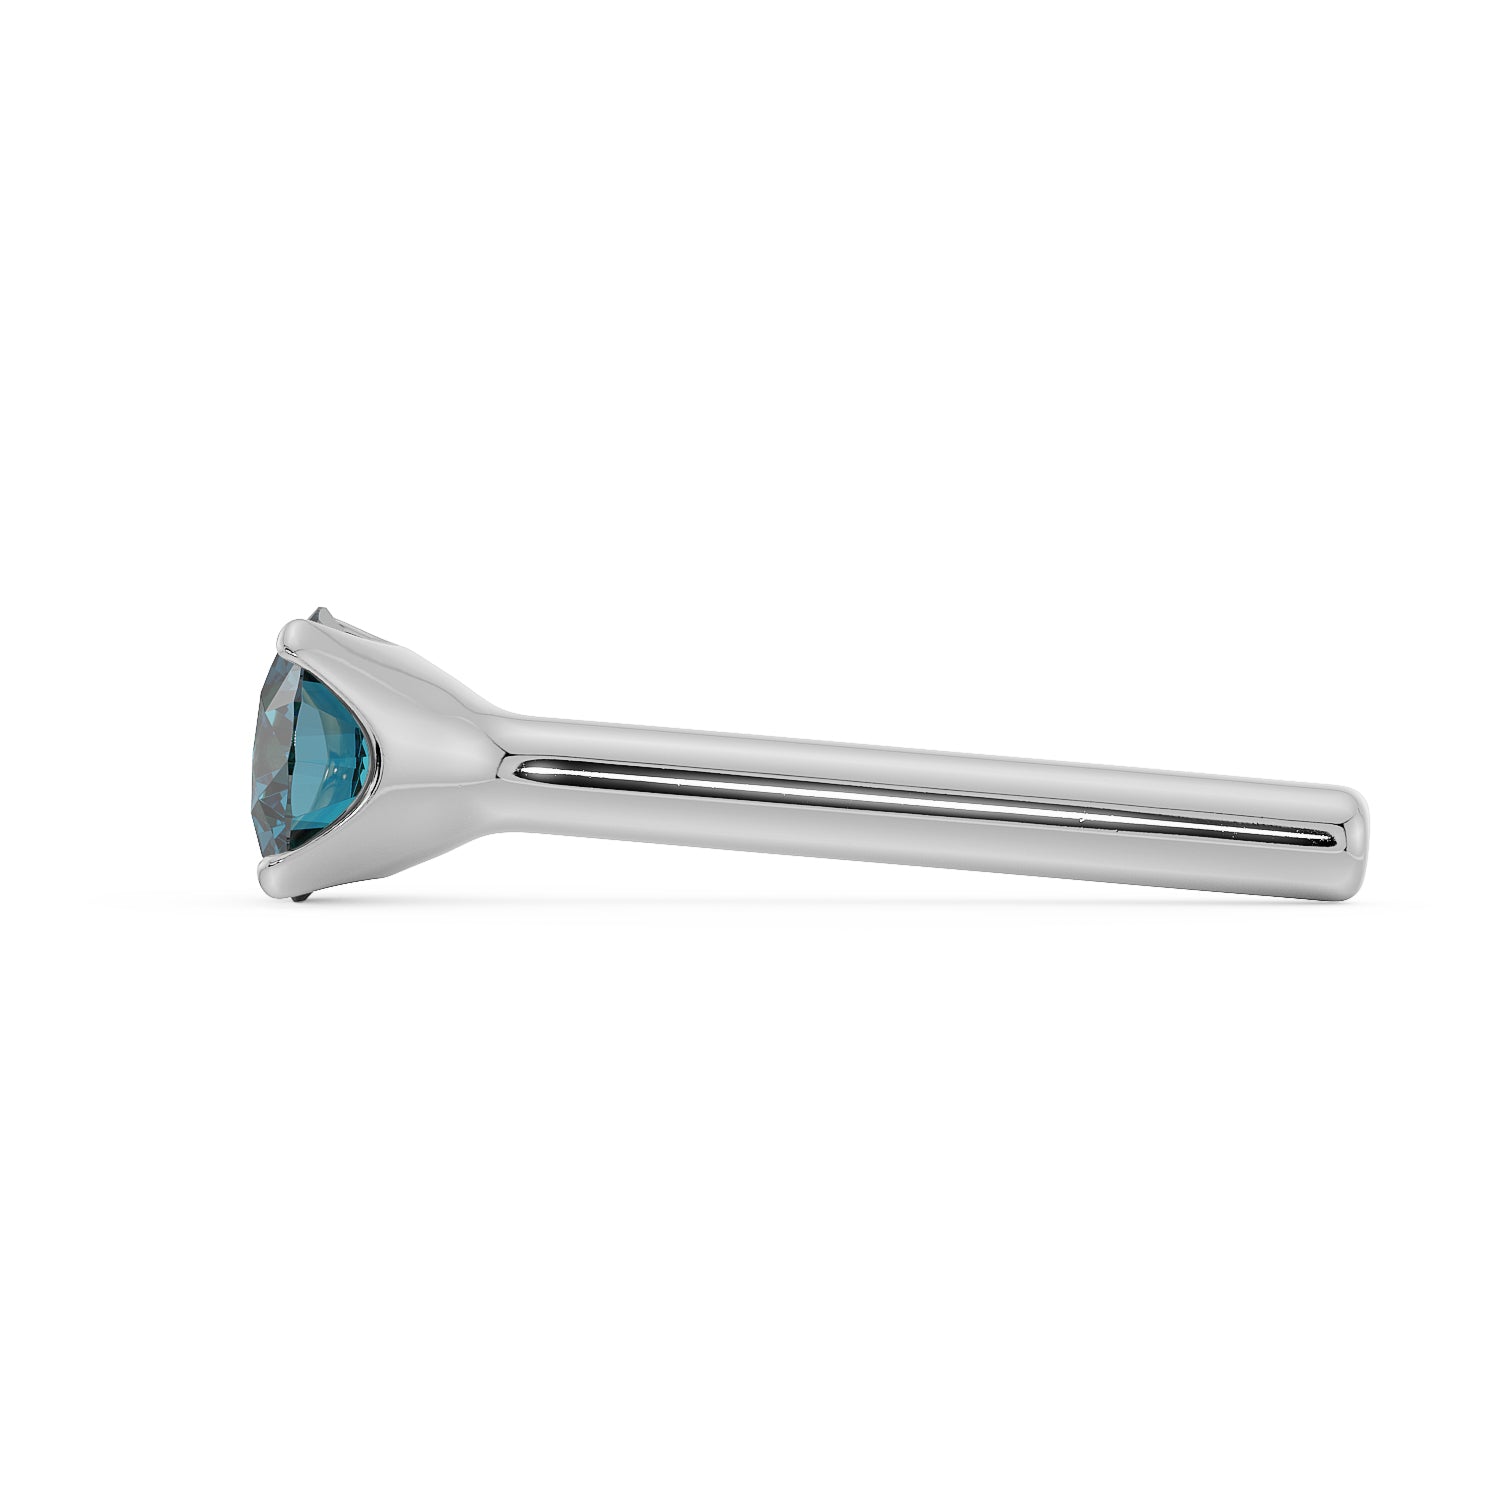 2.5mm Blue Diamond Prong Nose Ring Stud